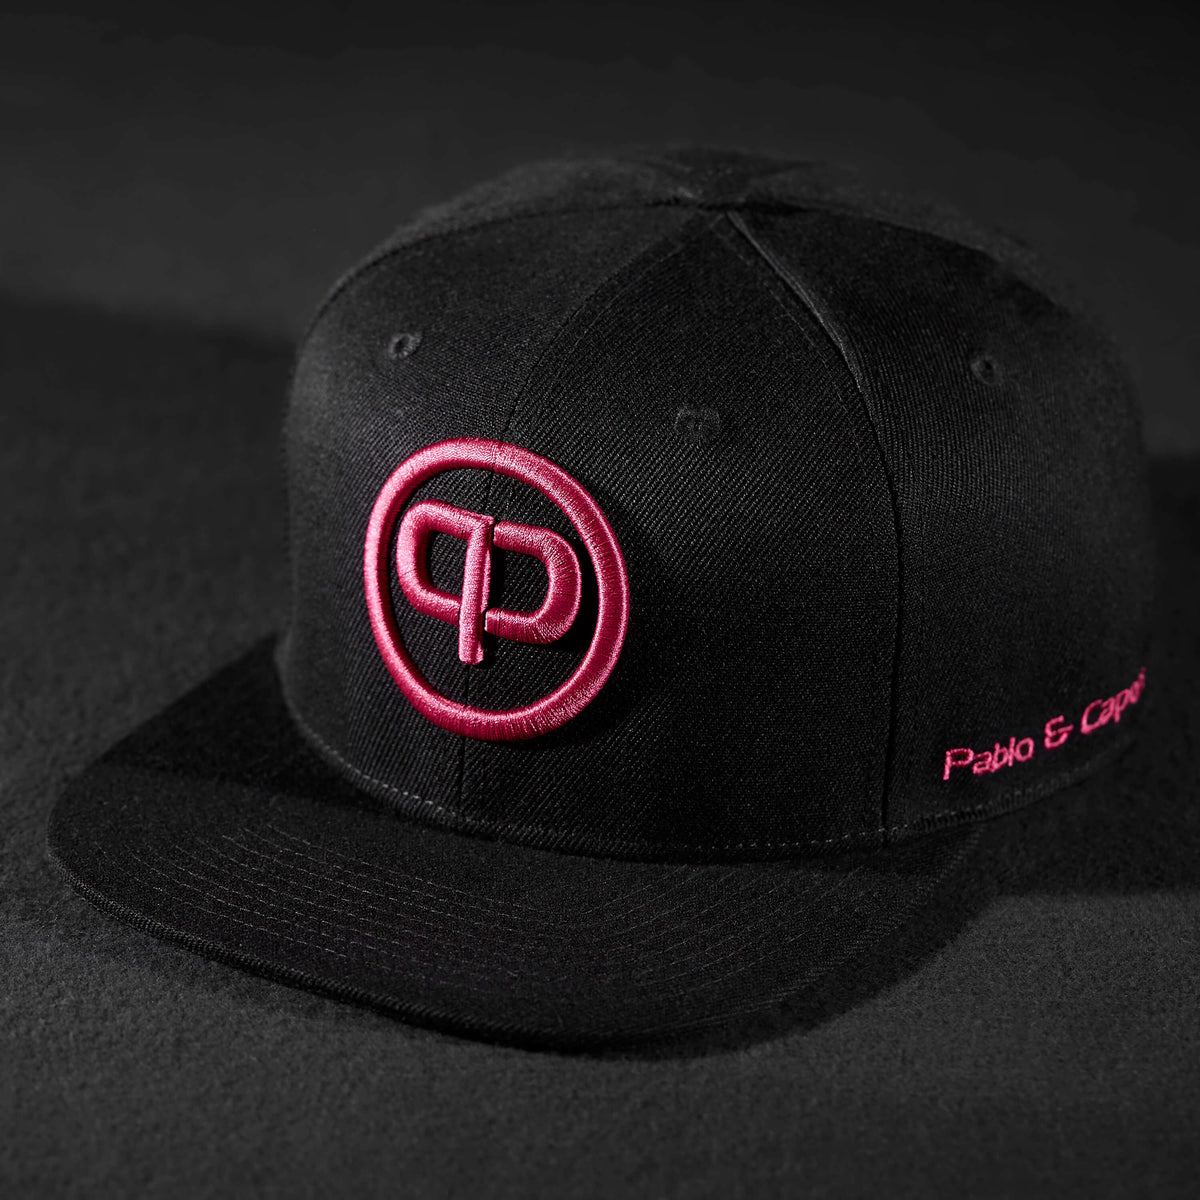 Pablo & Capone - Snapback Cap - Black & Pink